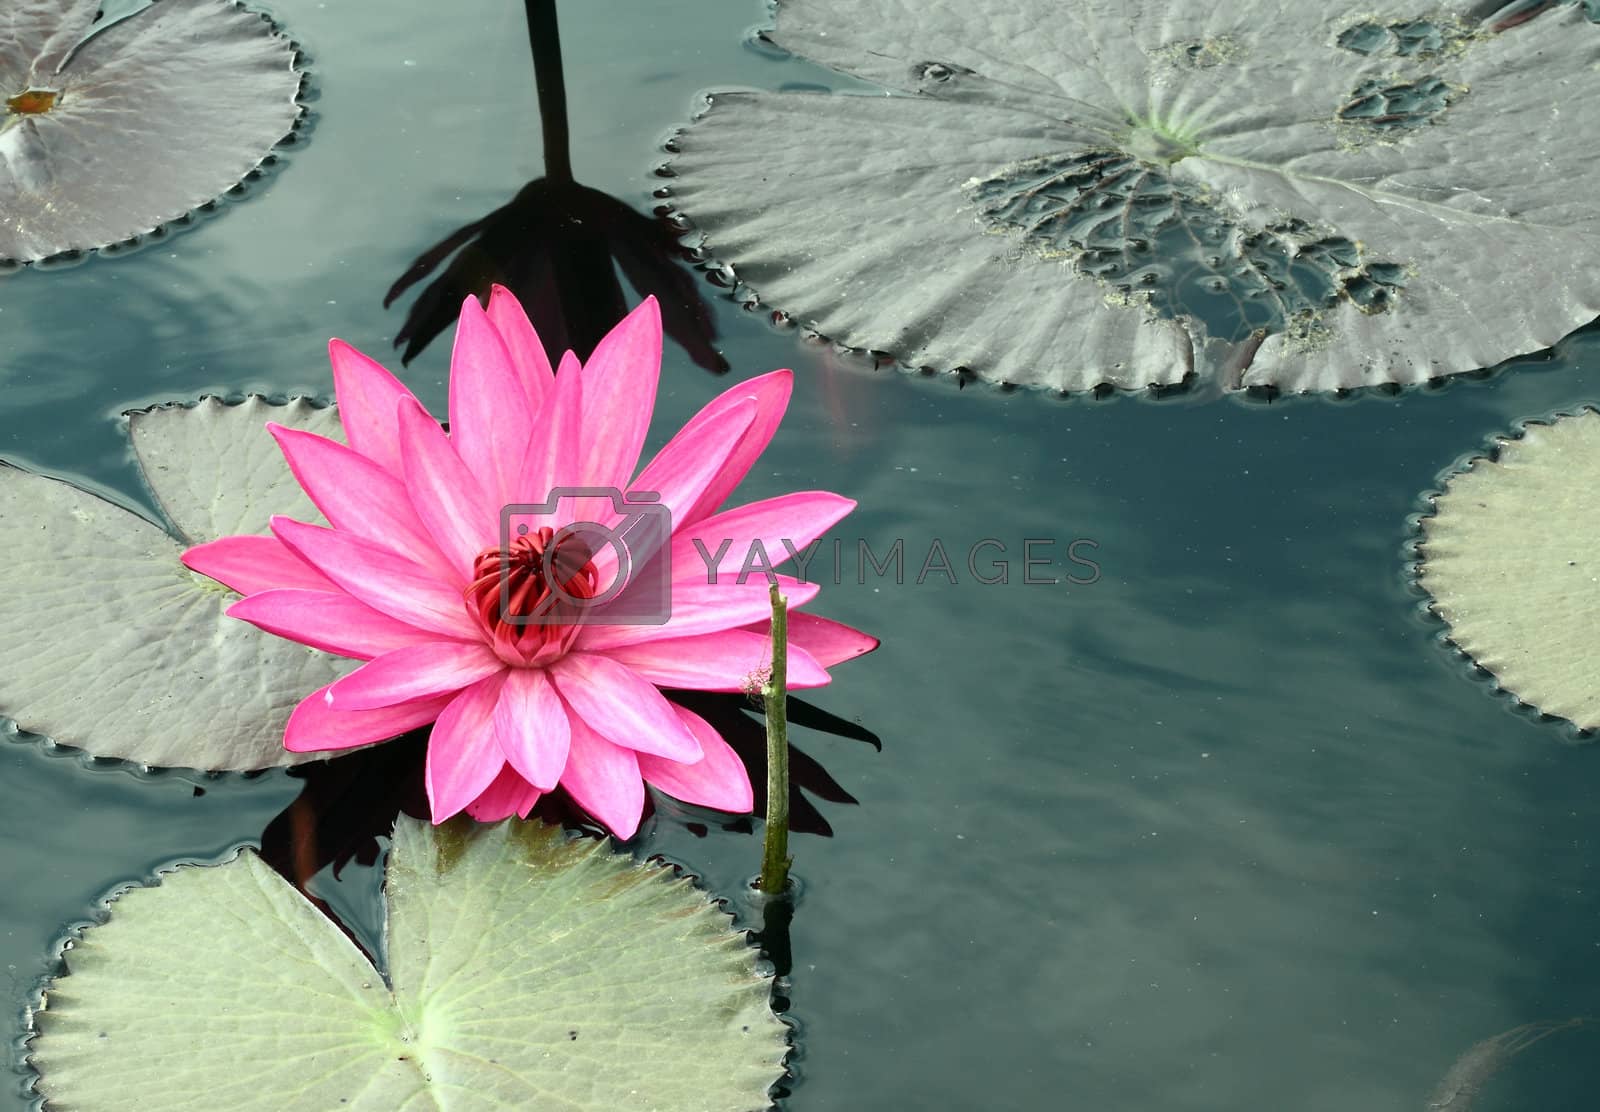 Royalty free image of pInk lotus by geargodz